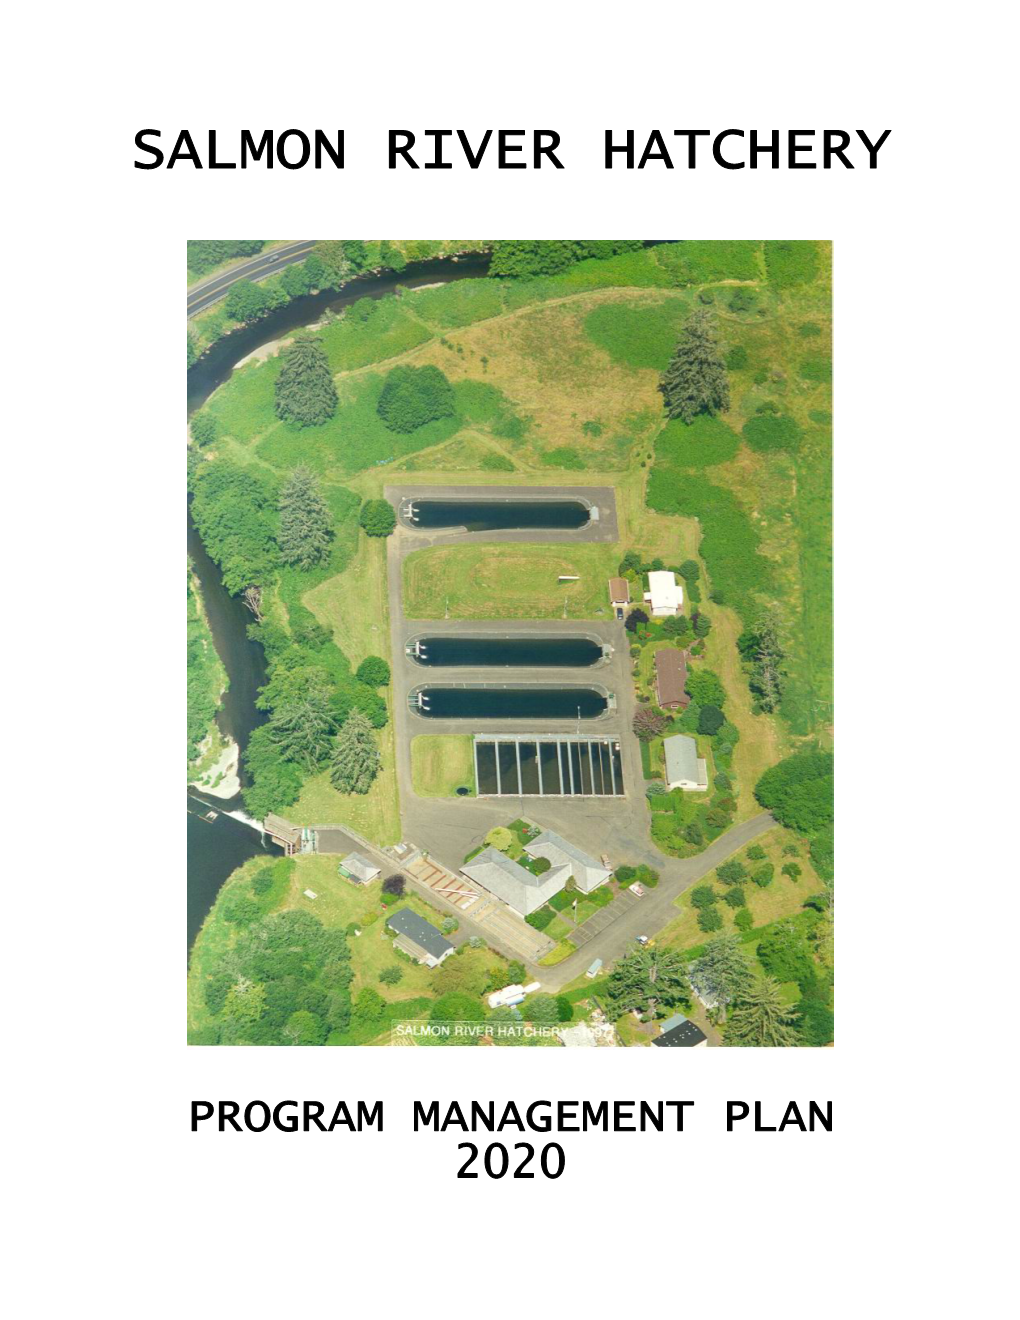 Salmon River Hatchery